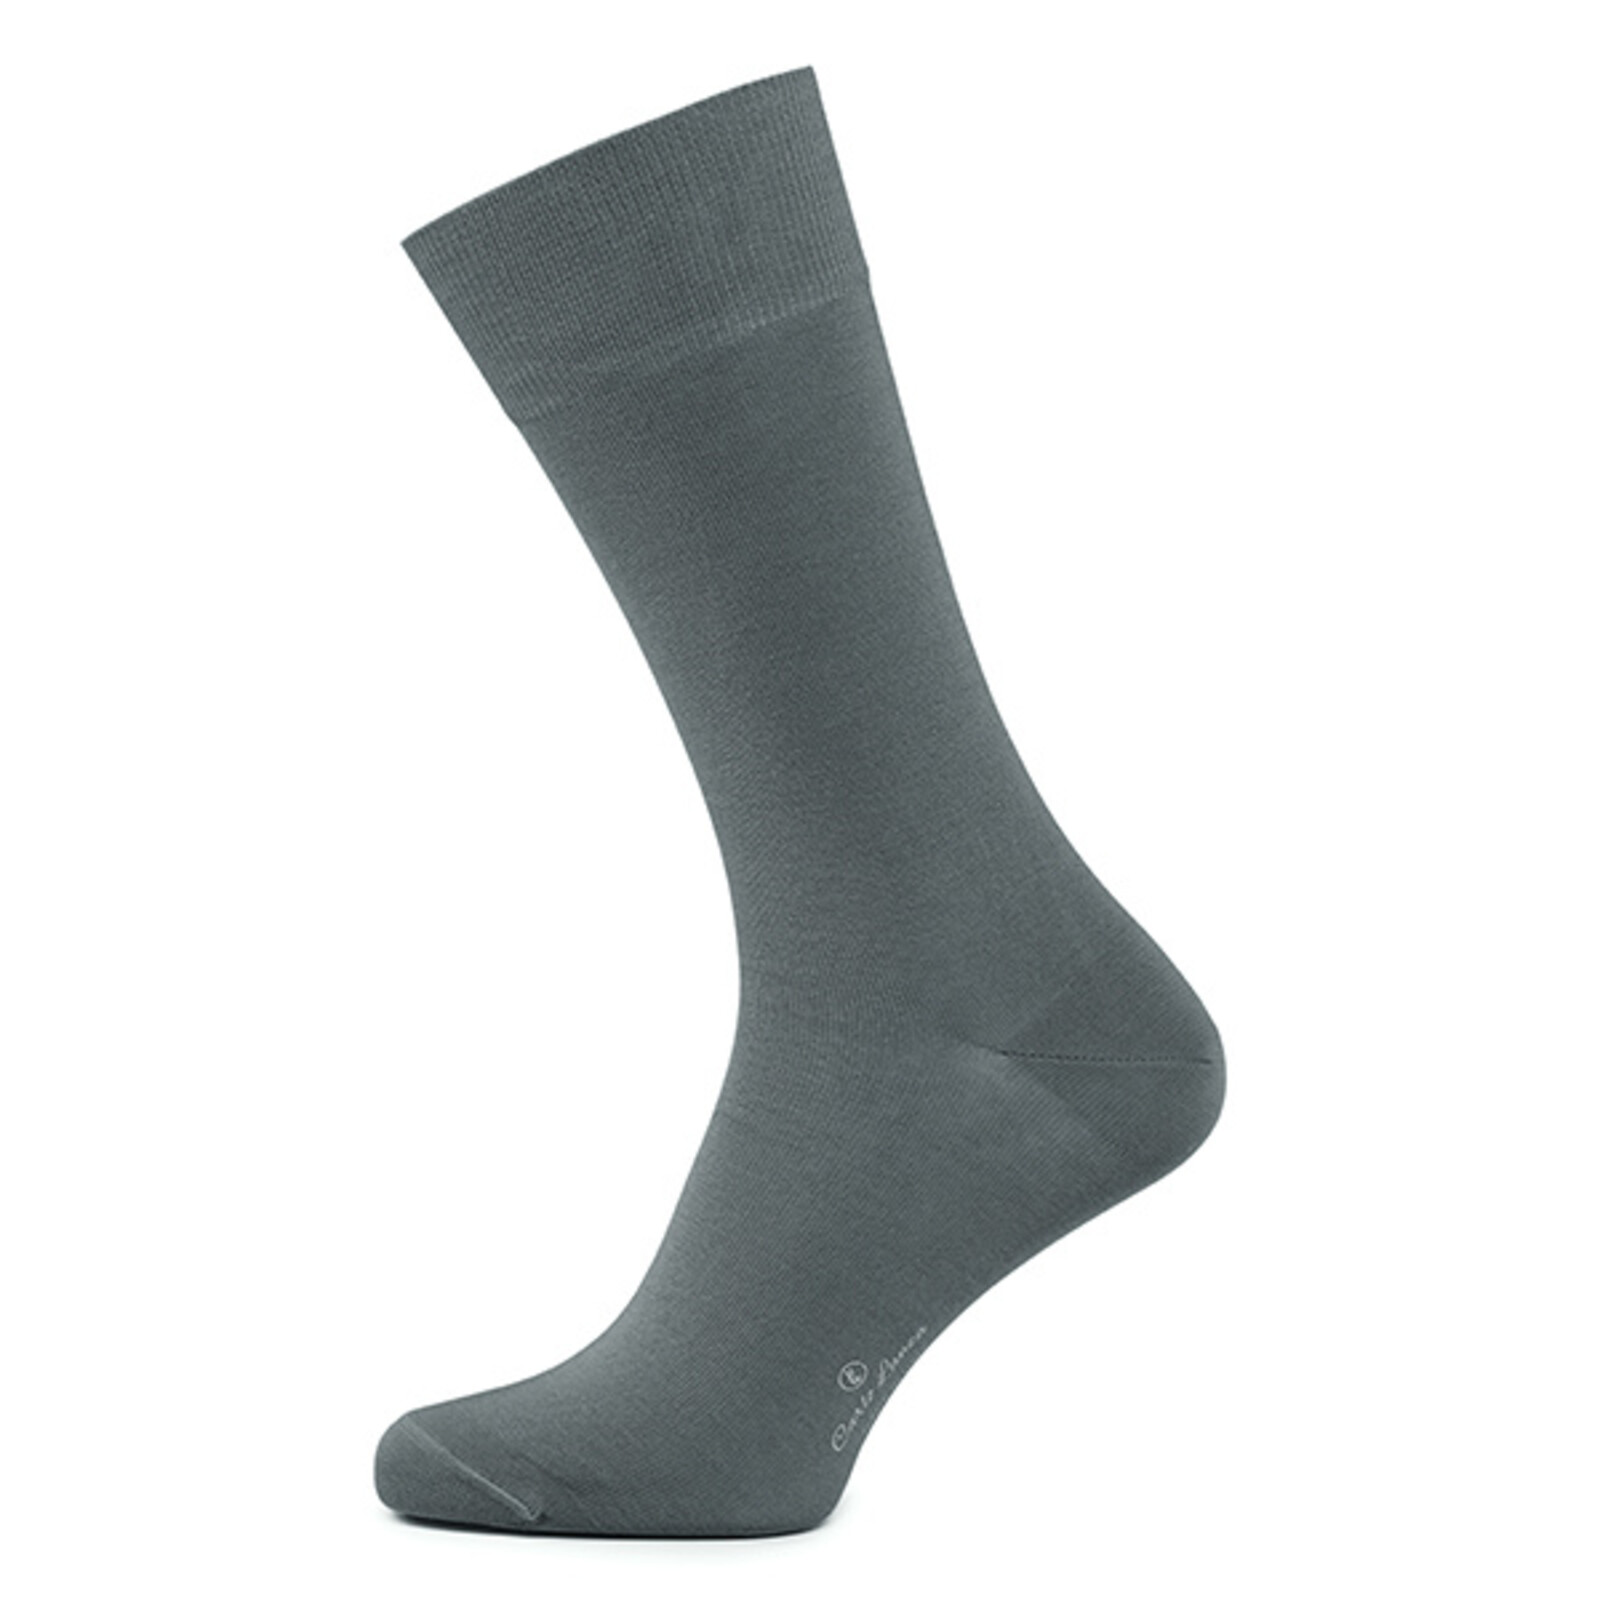 Carlo Lanza Steelblue cotton socks